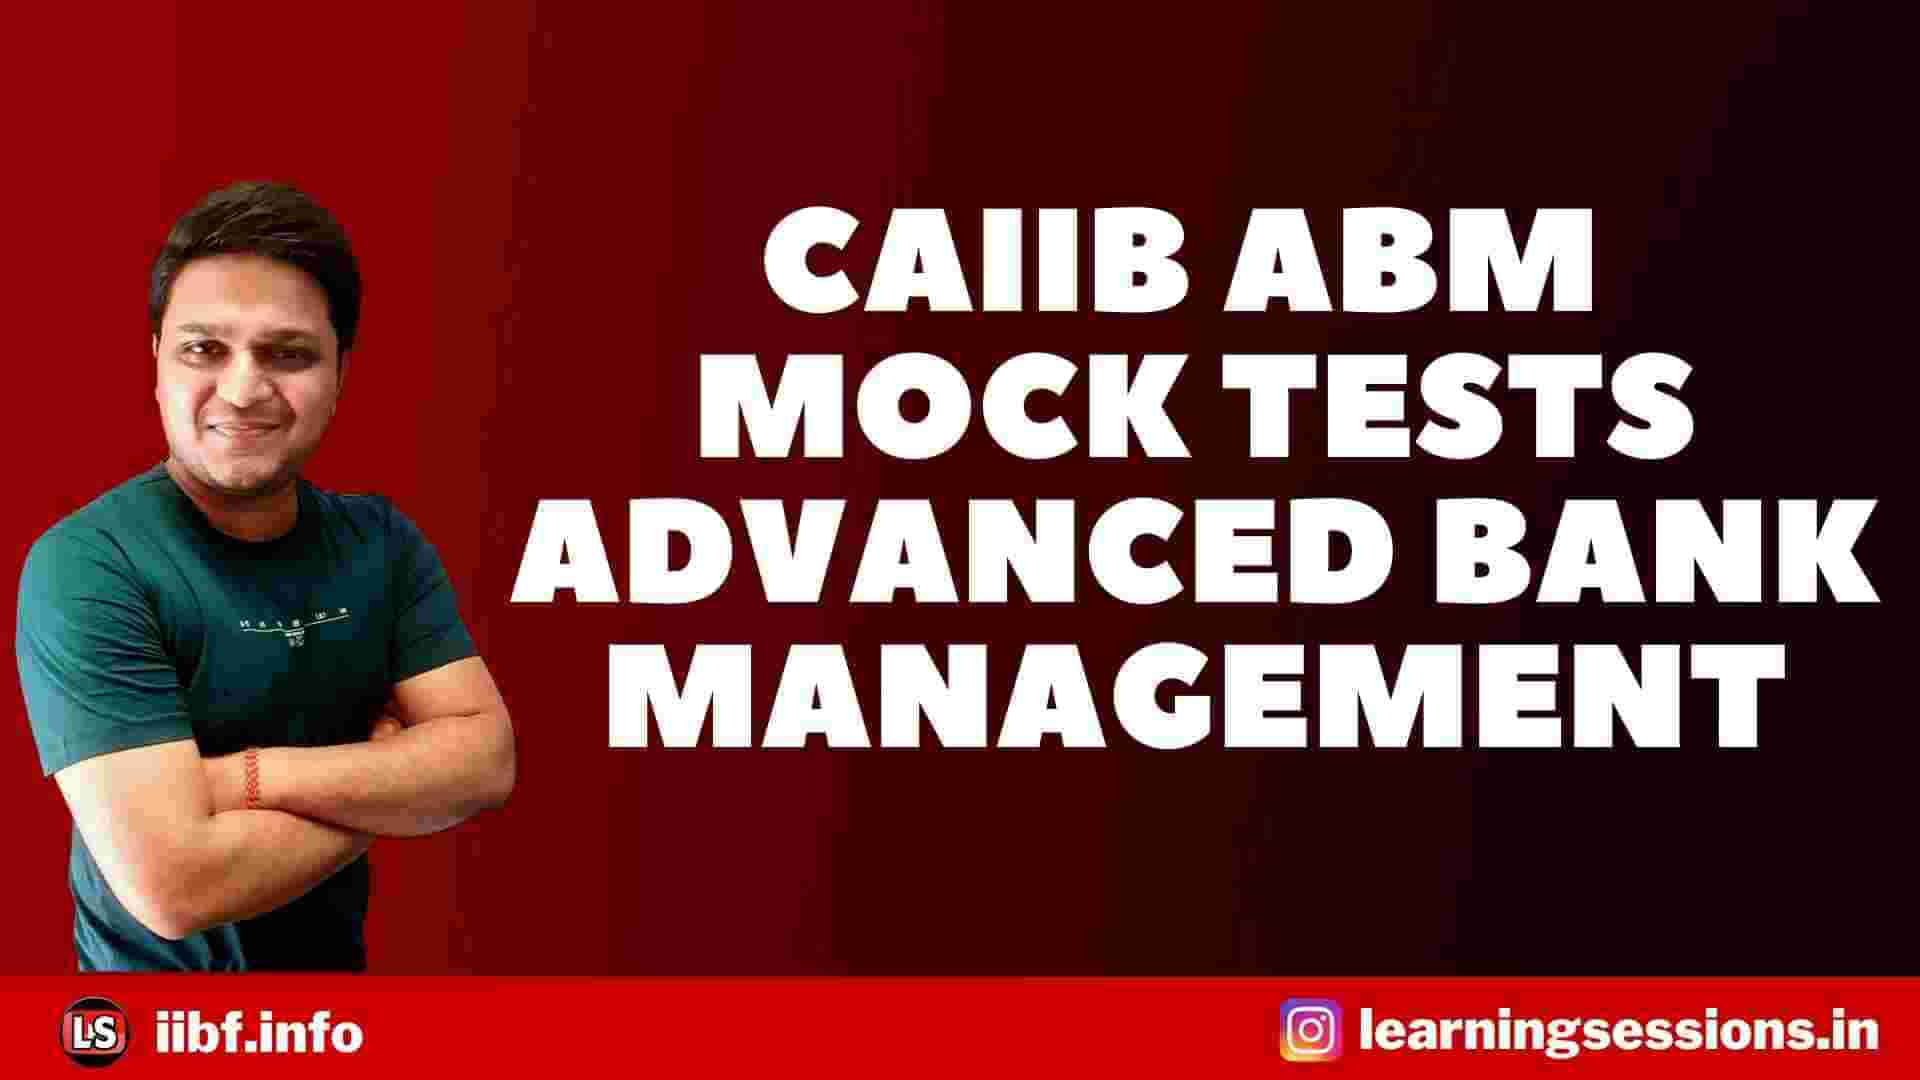 IIBF CAIIB ABM MOCK TESTS - Advanced Bank Management